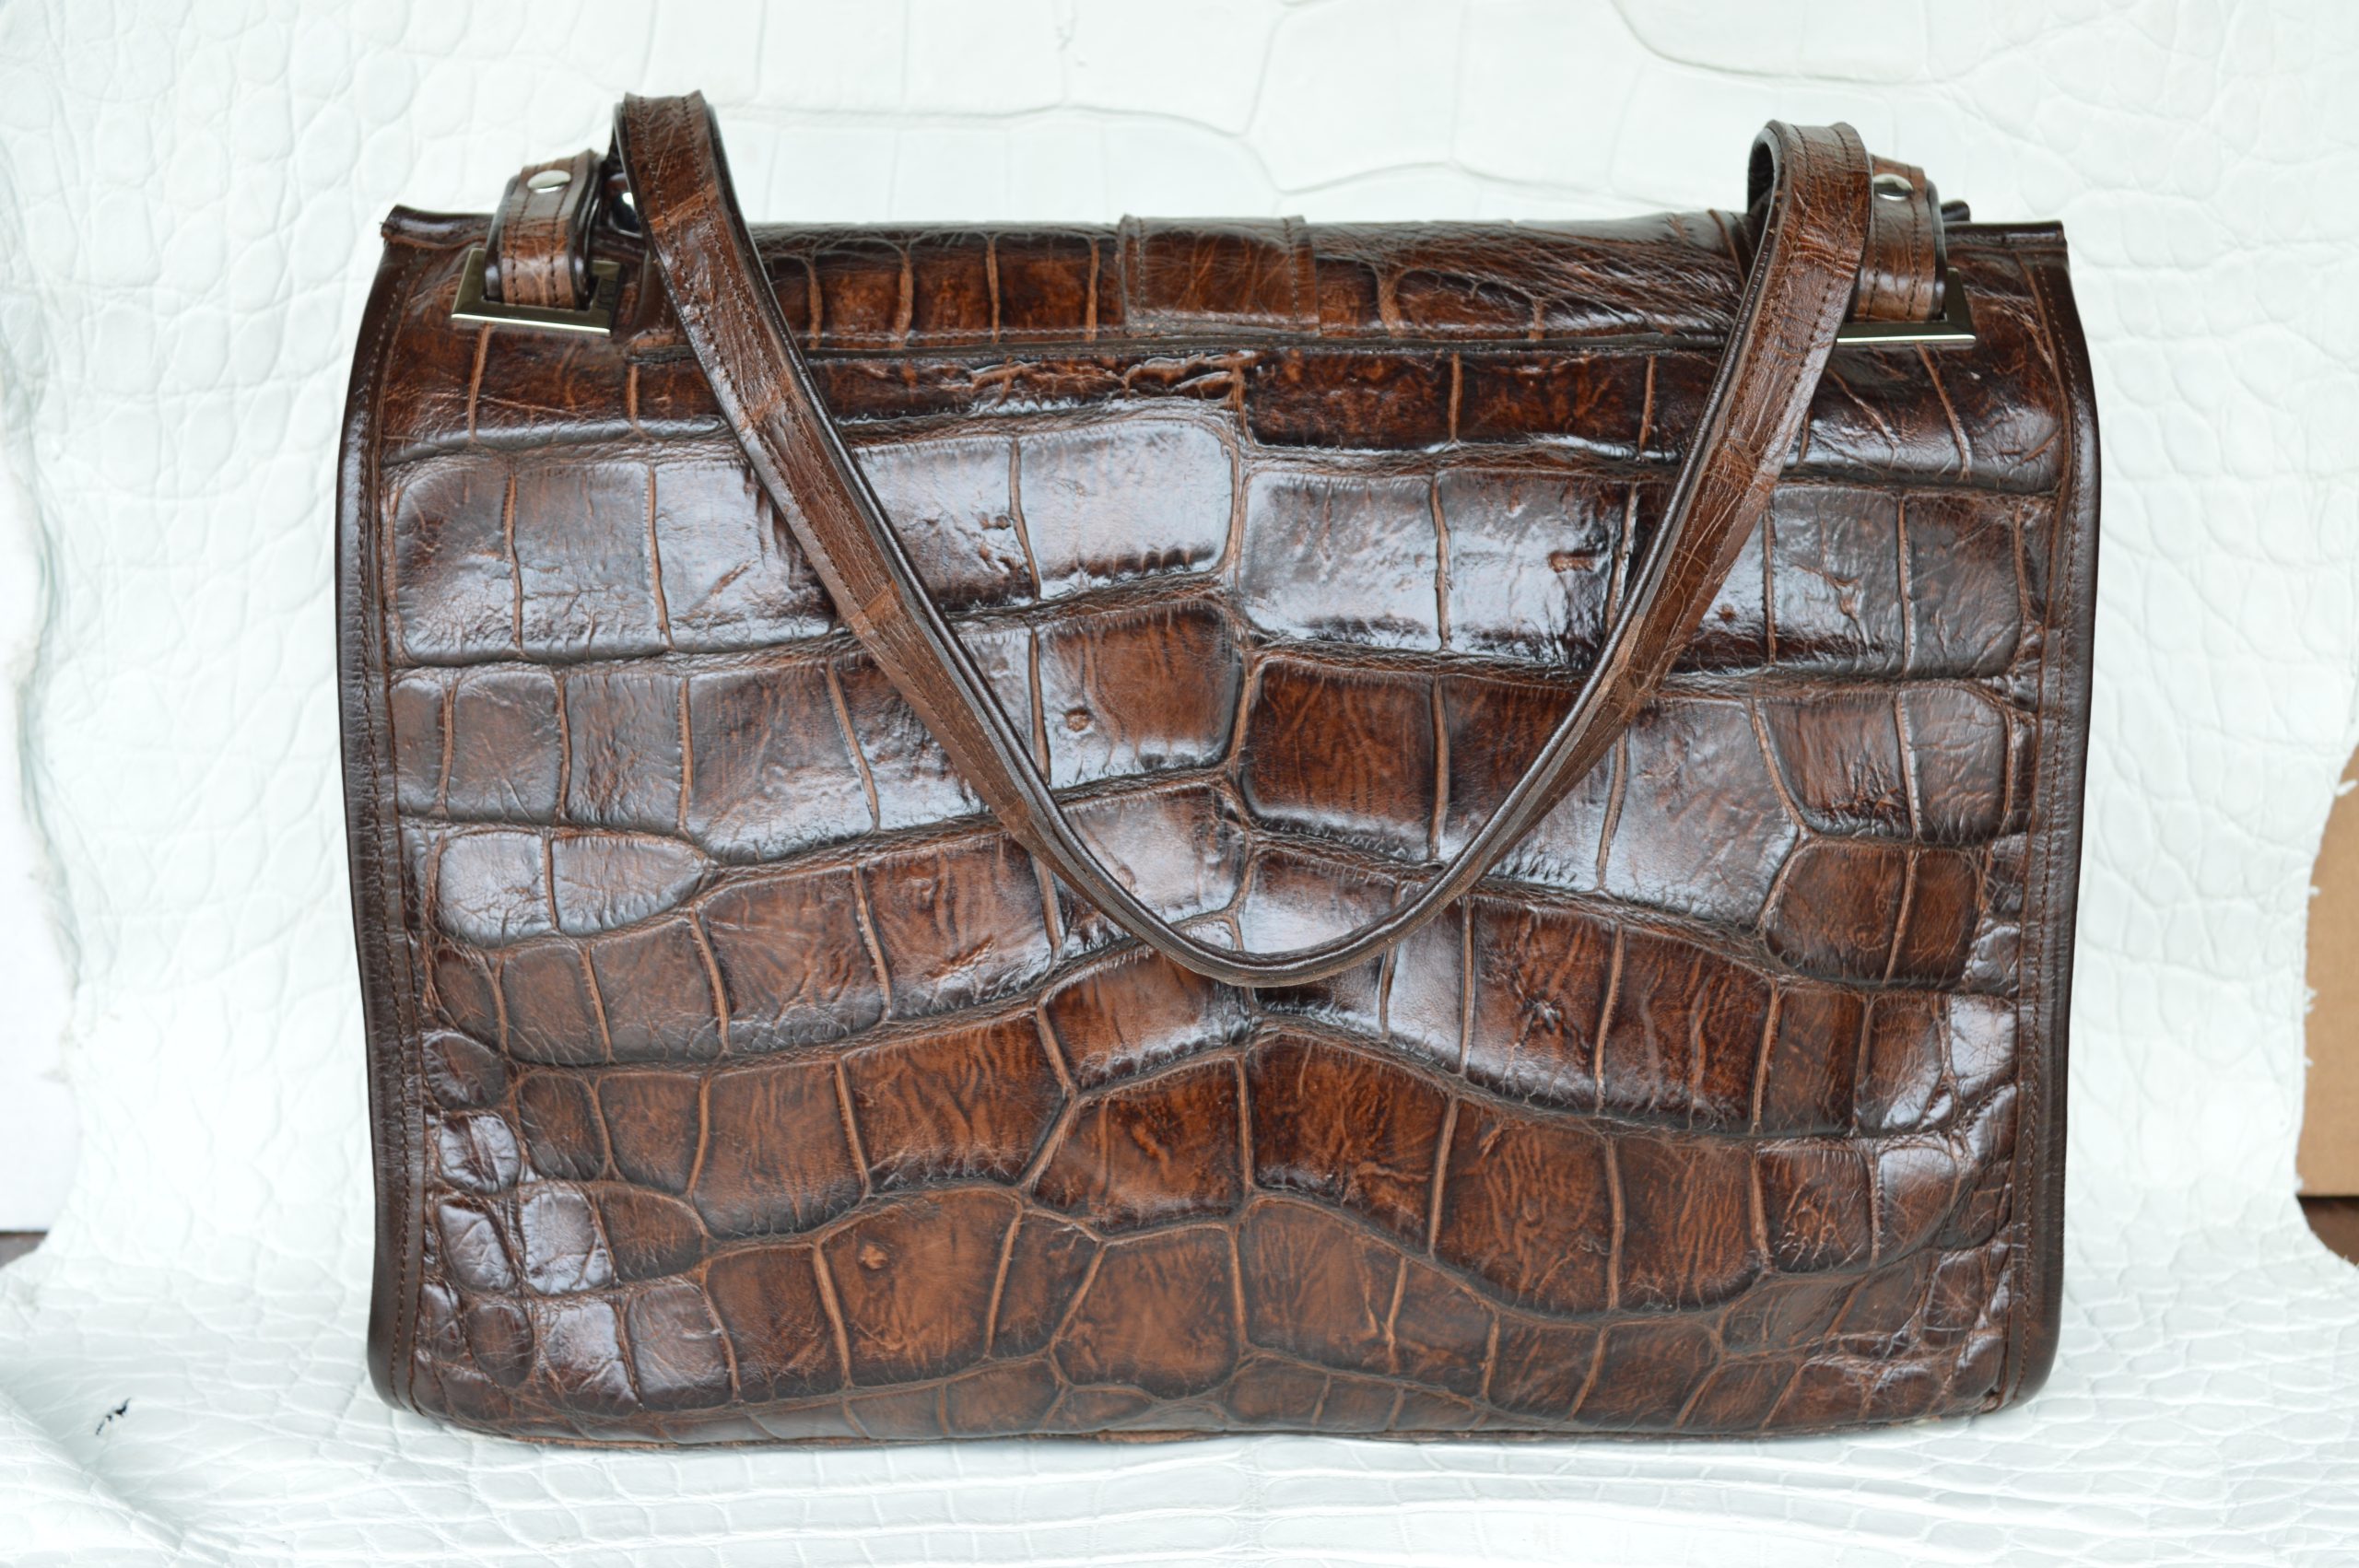 100% Genuine Crocodile Leather Women Handbag Real Alligator Skin Shoulder  Bag Luxury Tote Bag Crossbody Bag